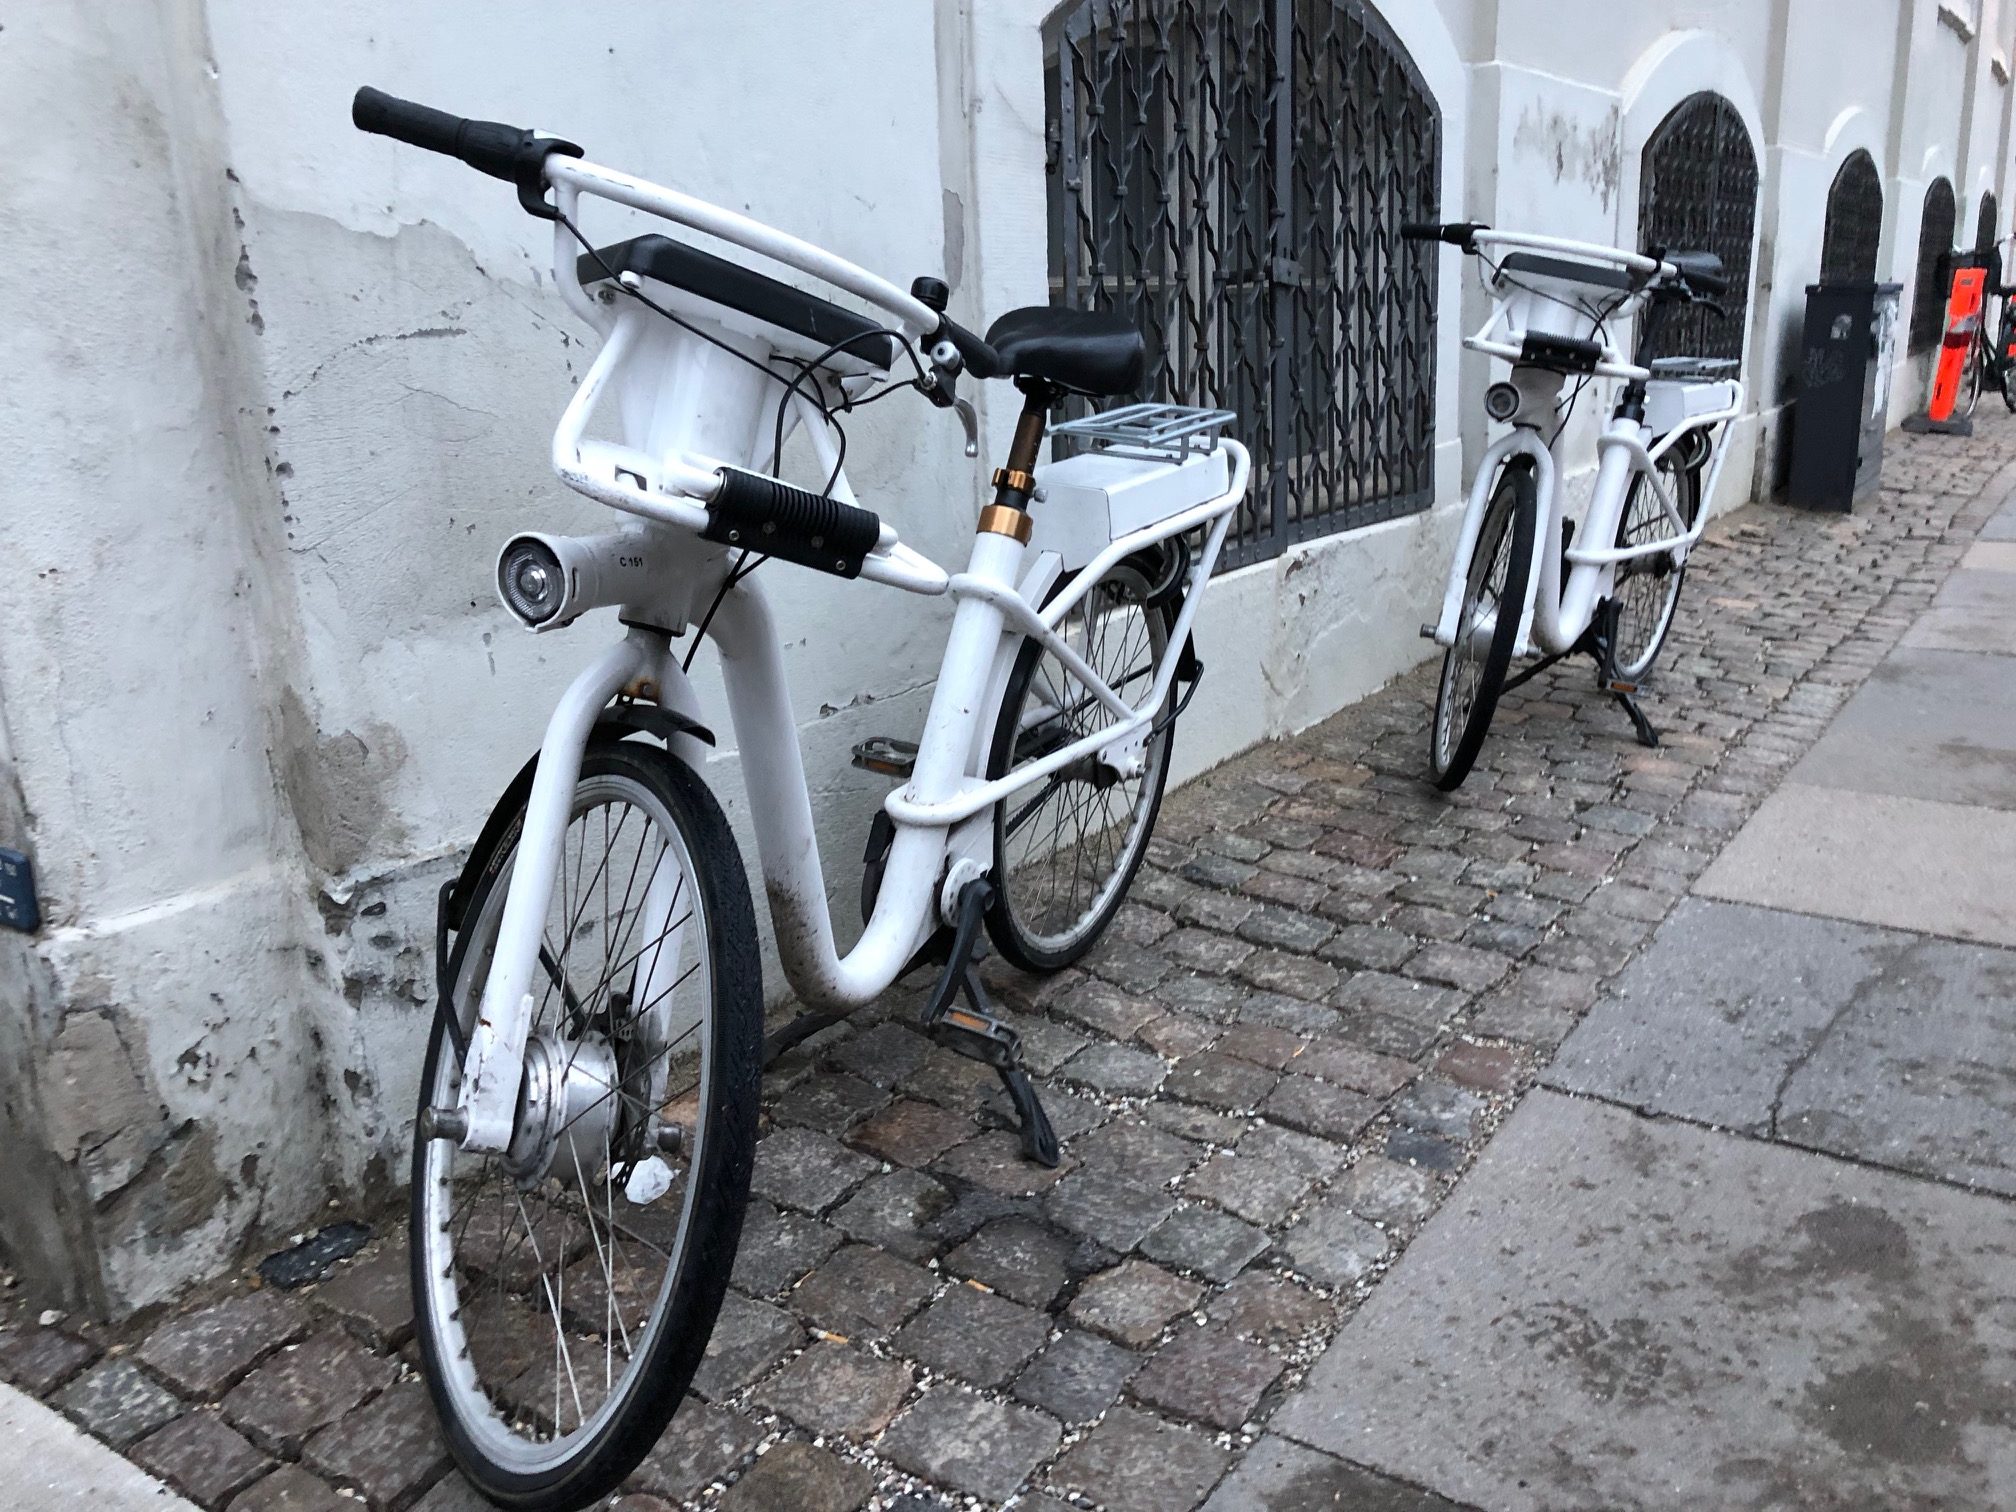 E-Bikes in Copenhagen, Denmark. Photo by Dave Iltis